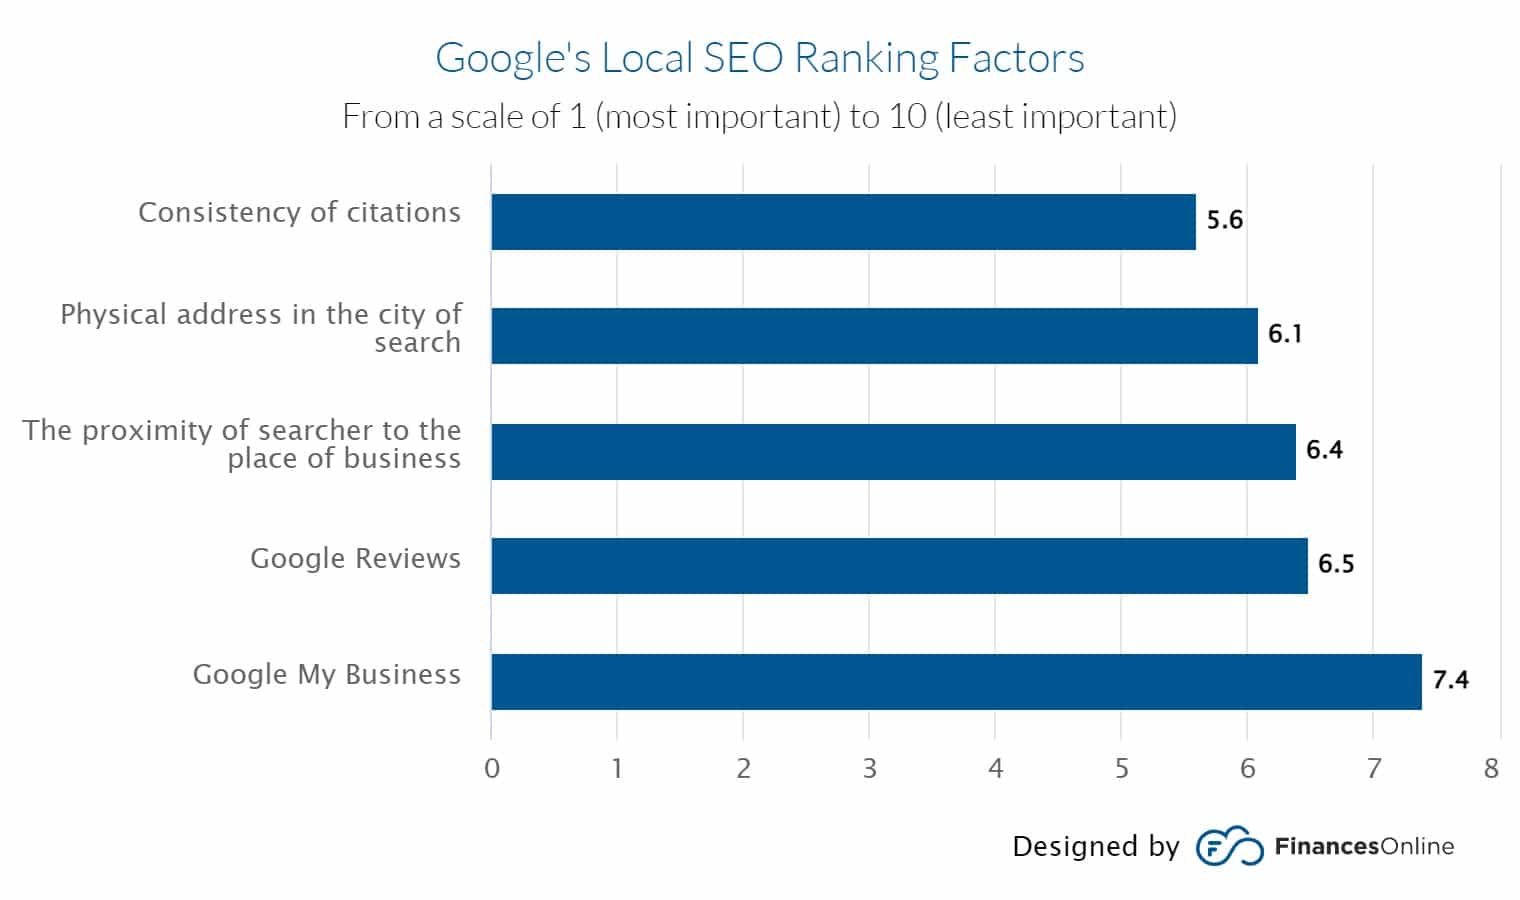 consistent citations important google local seo ranking factor